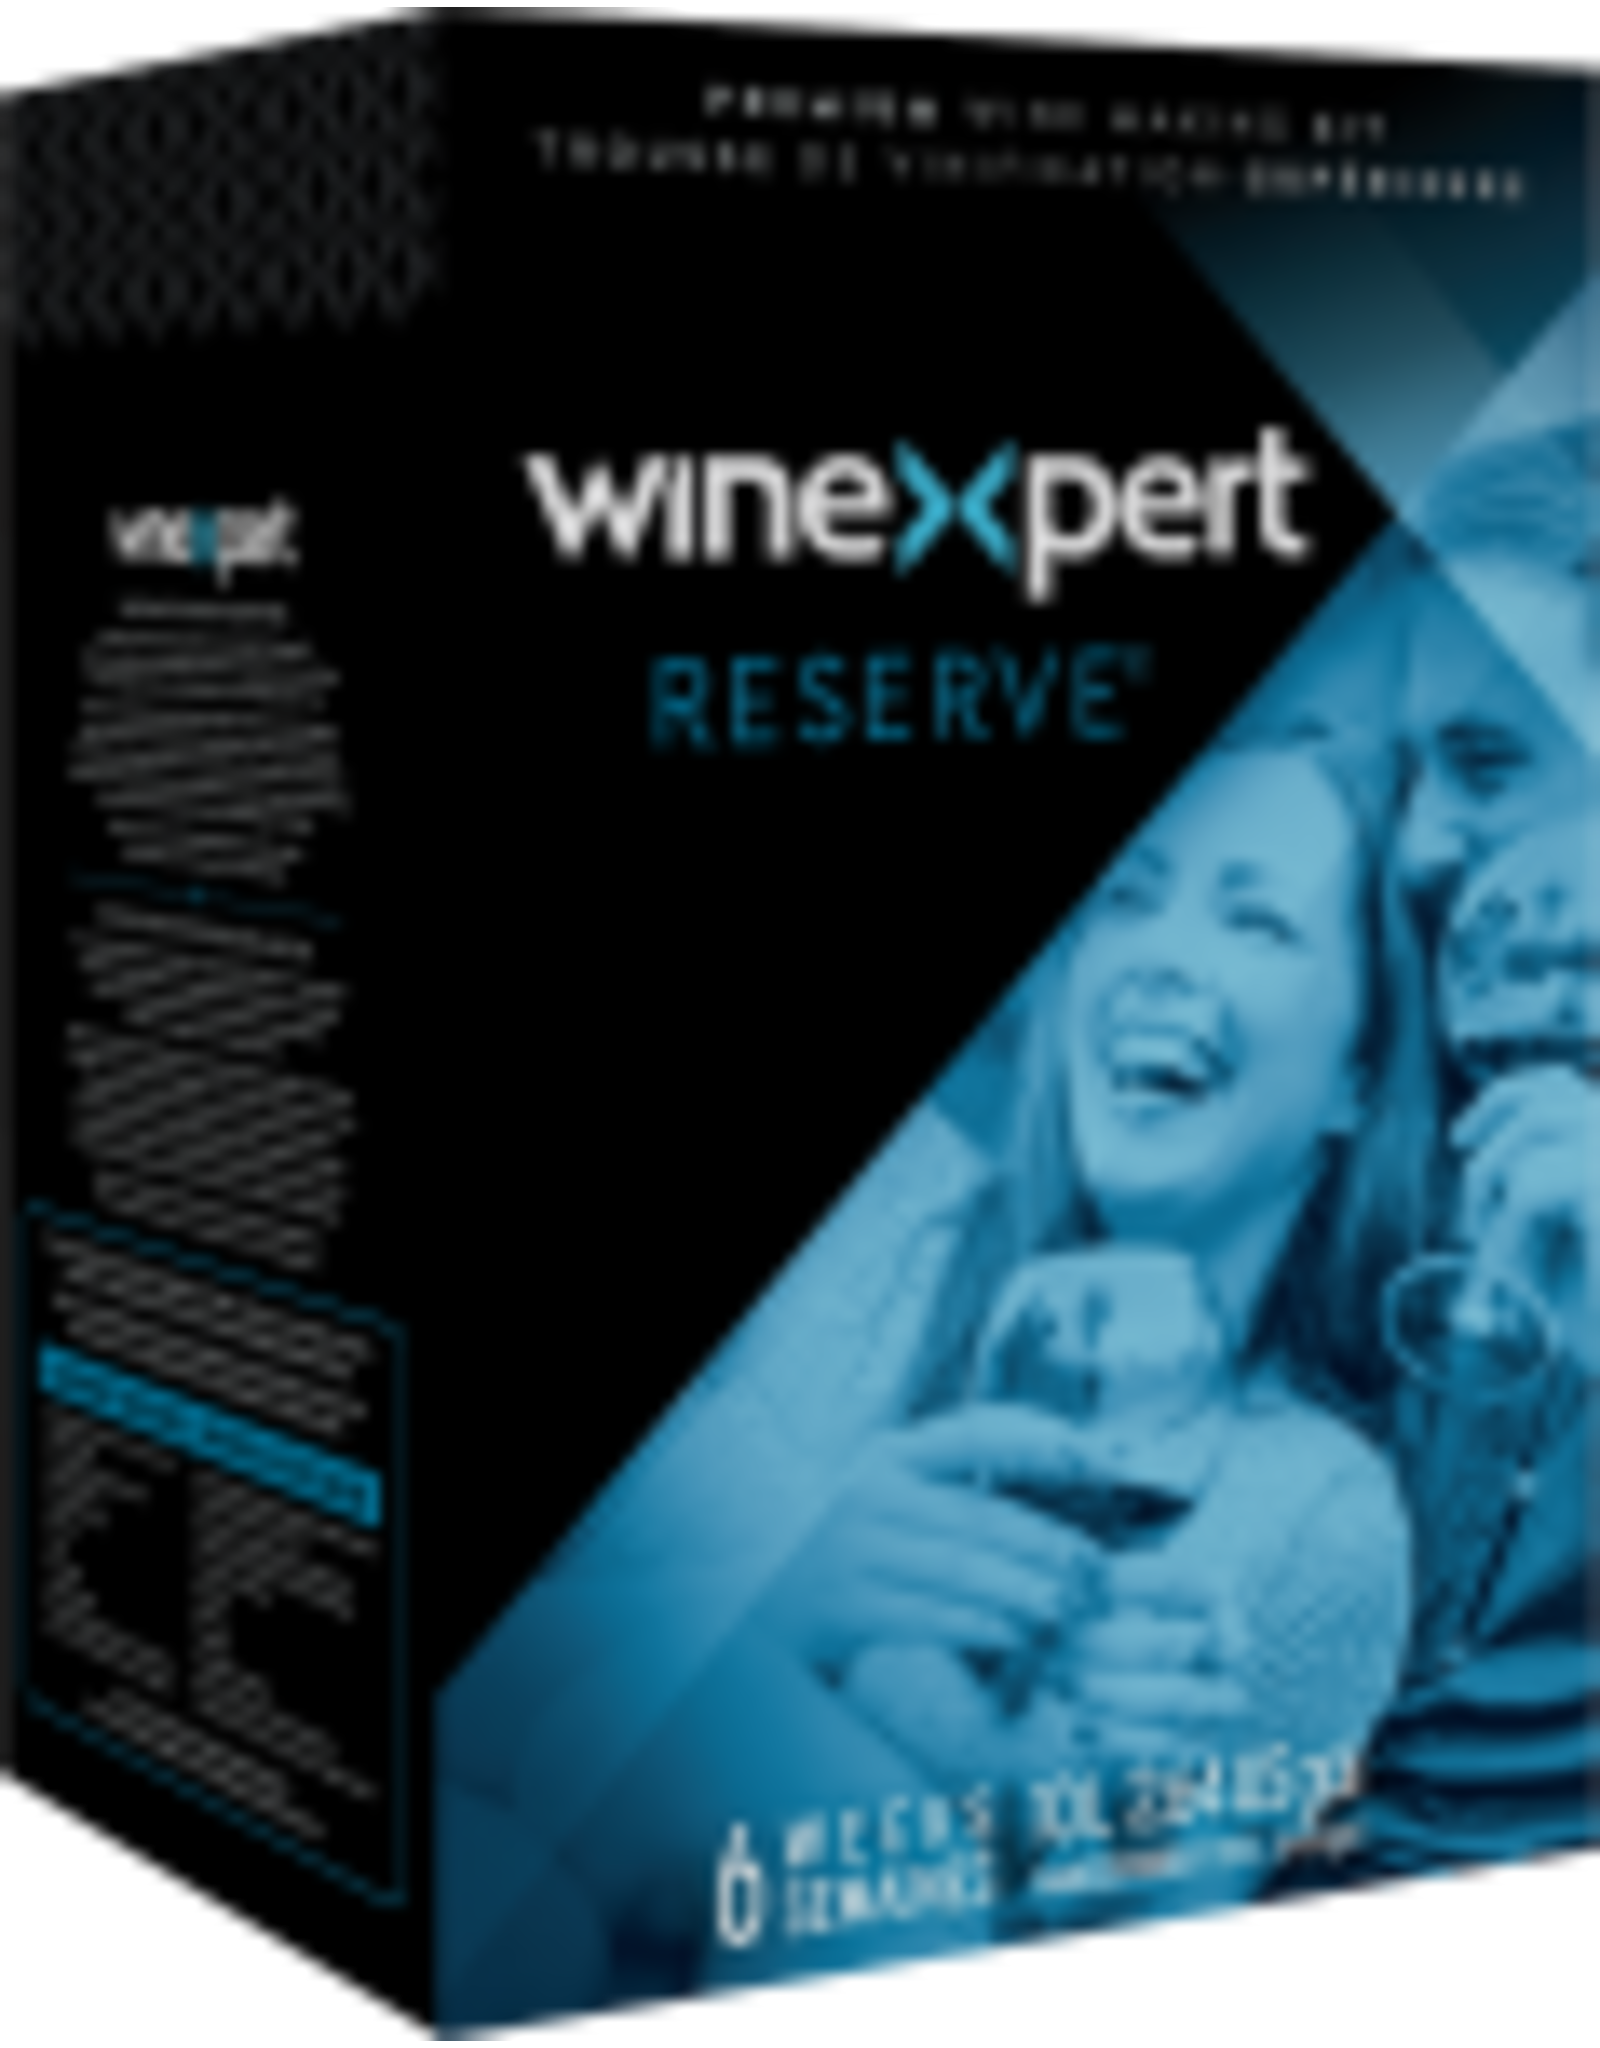 Reserve Winexpert Reserve Merlot California